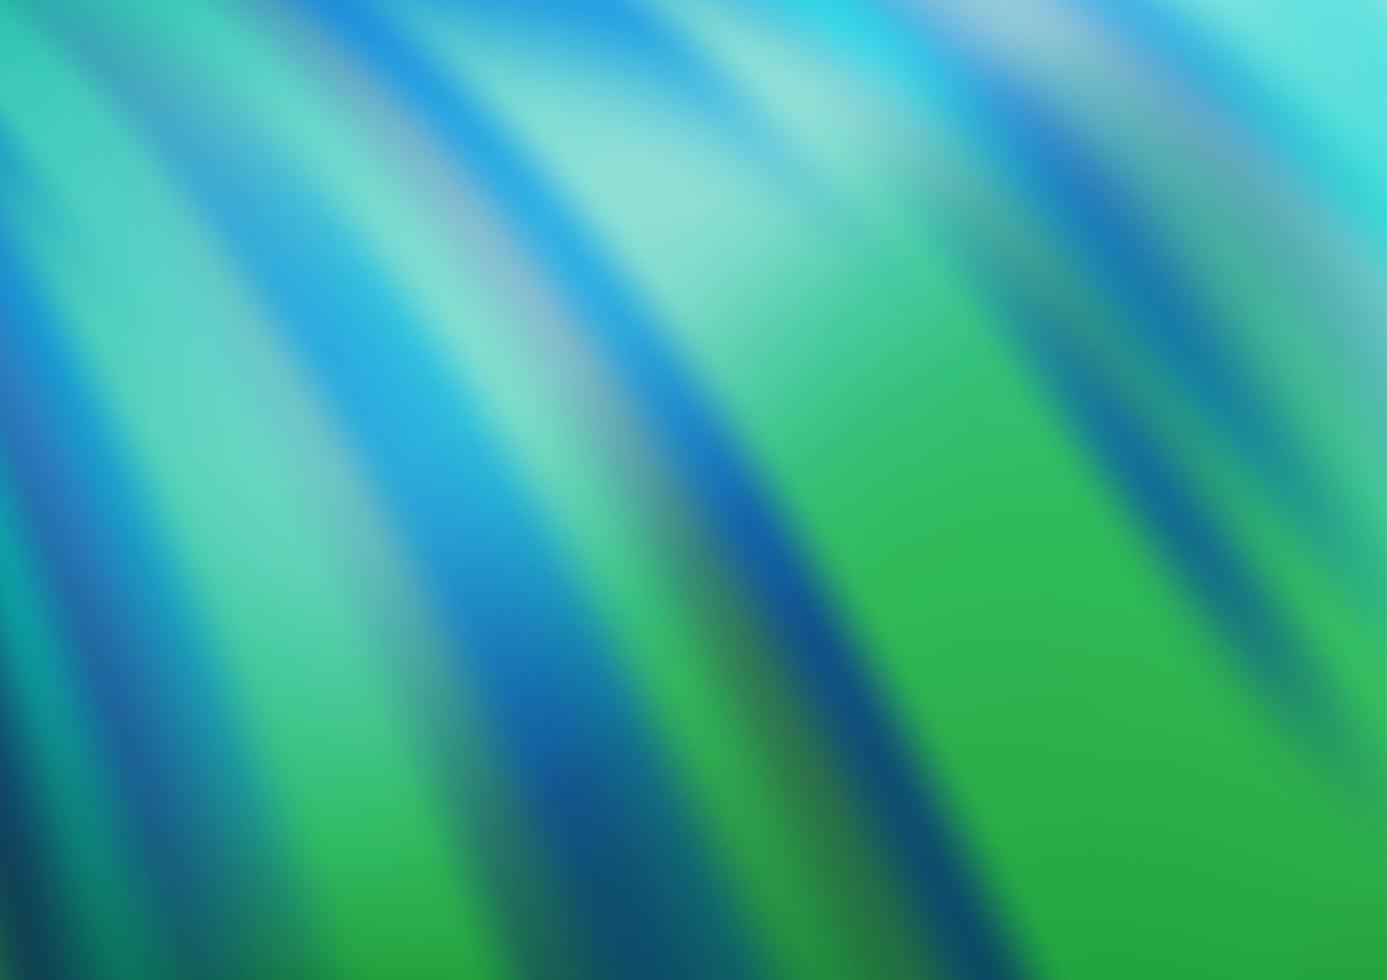 luz azul, verde vetor turva fundo abstrato de brilho.